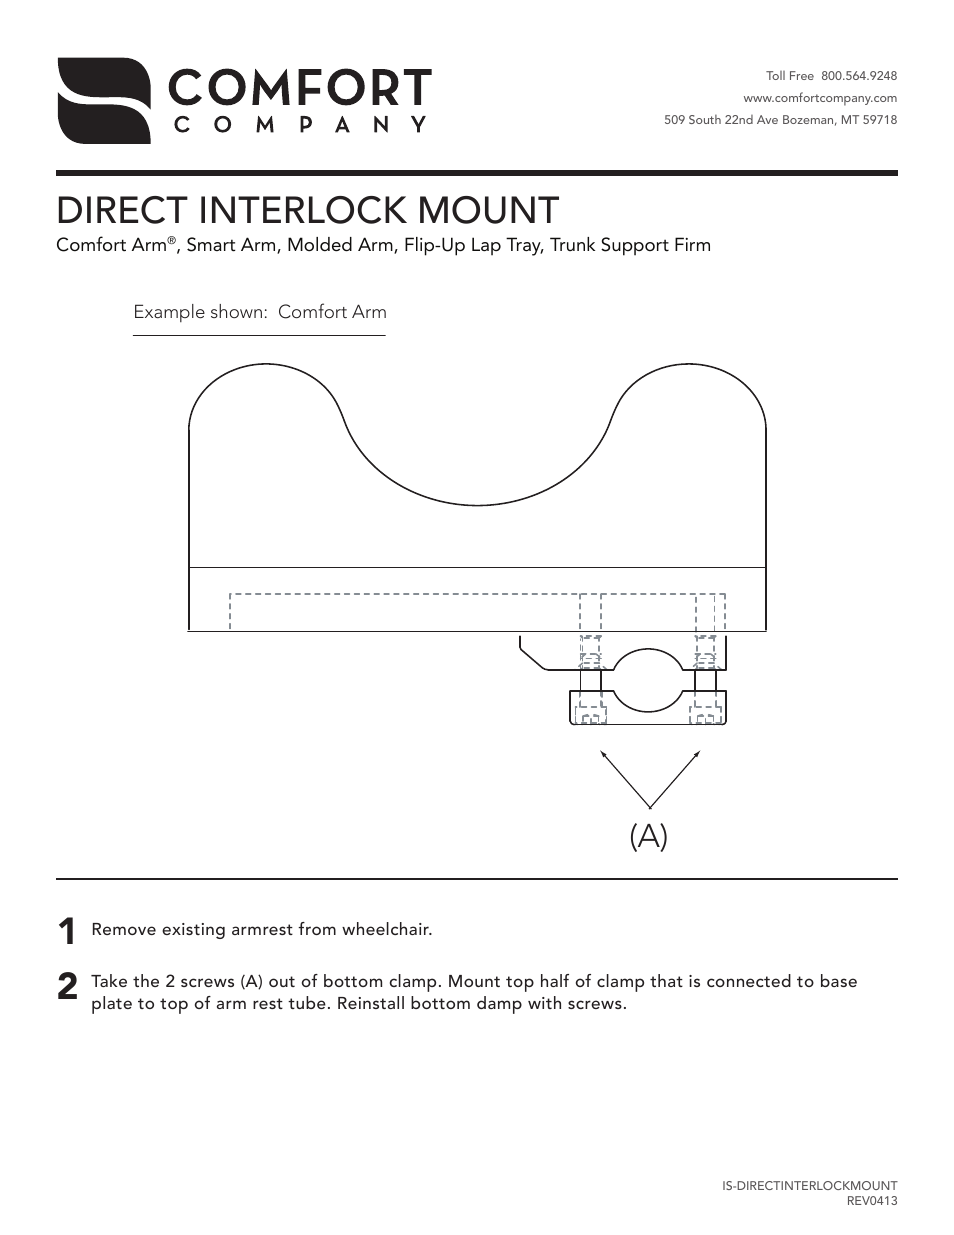 Direct Interlock Mount